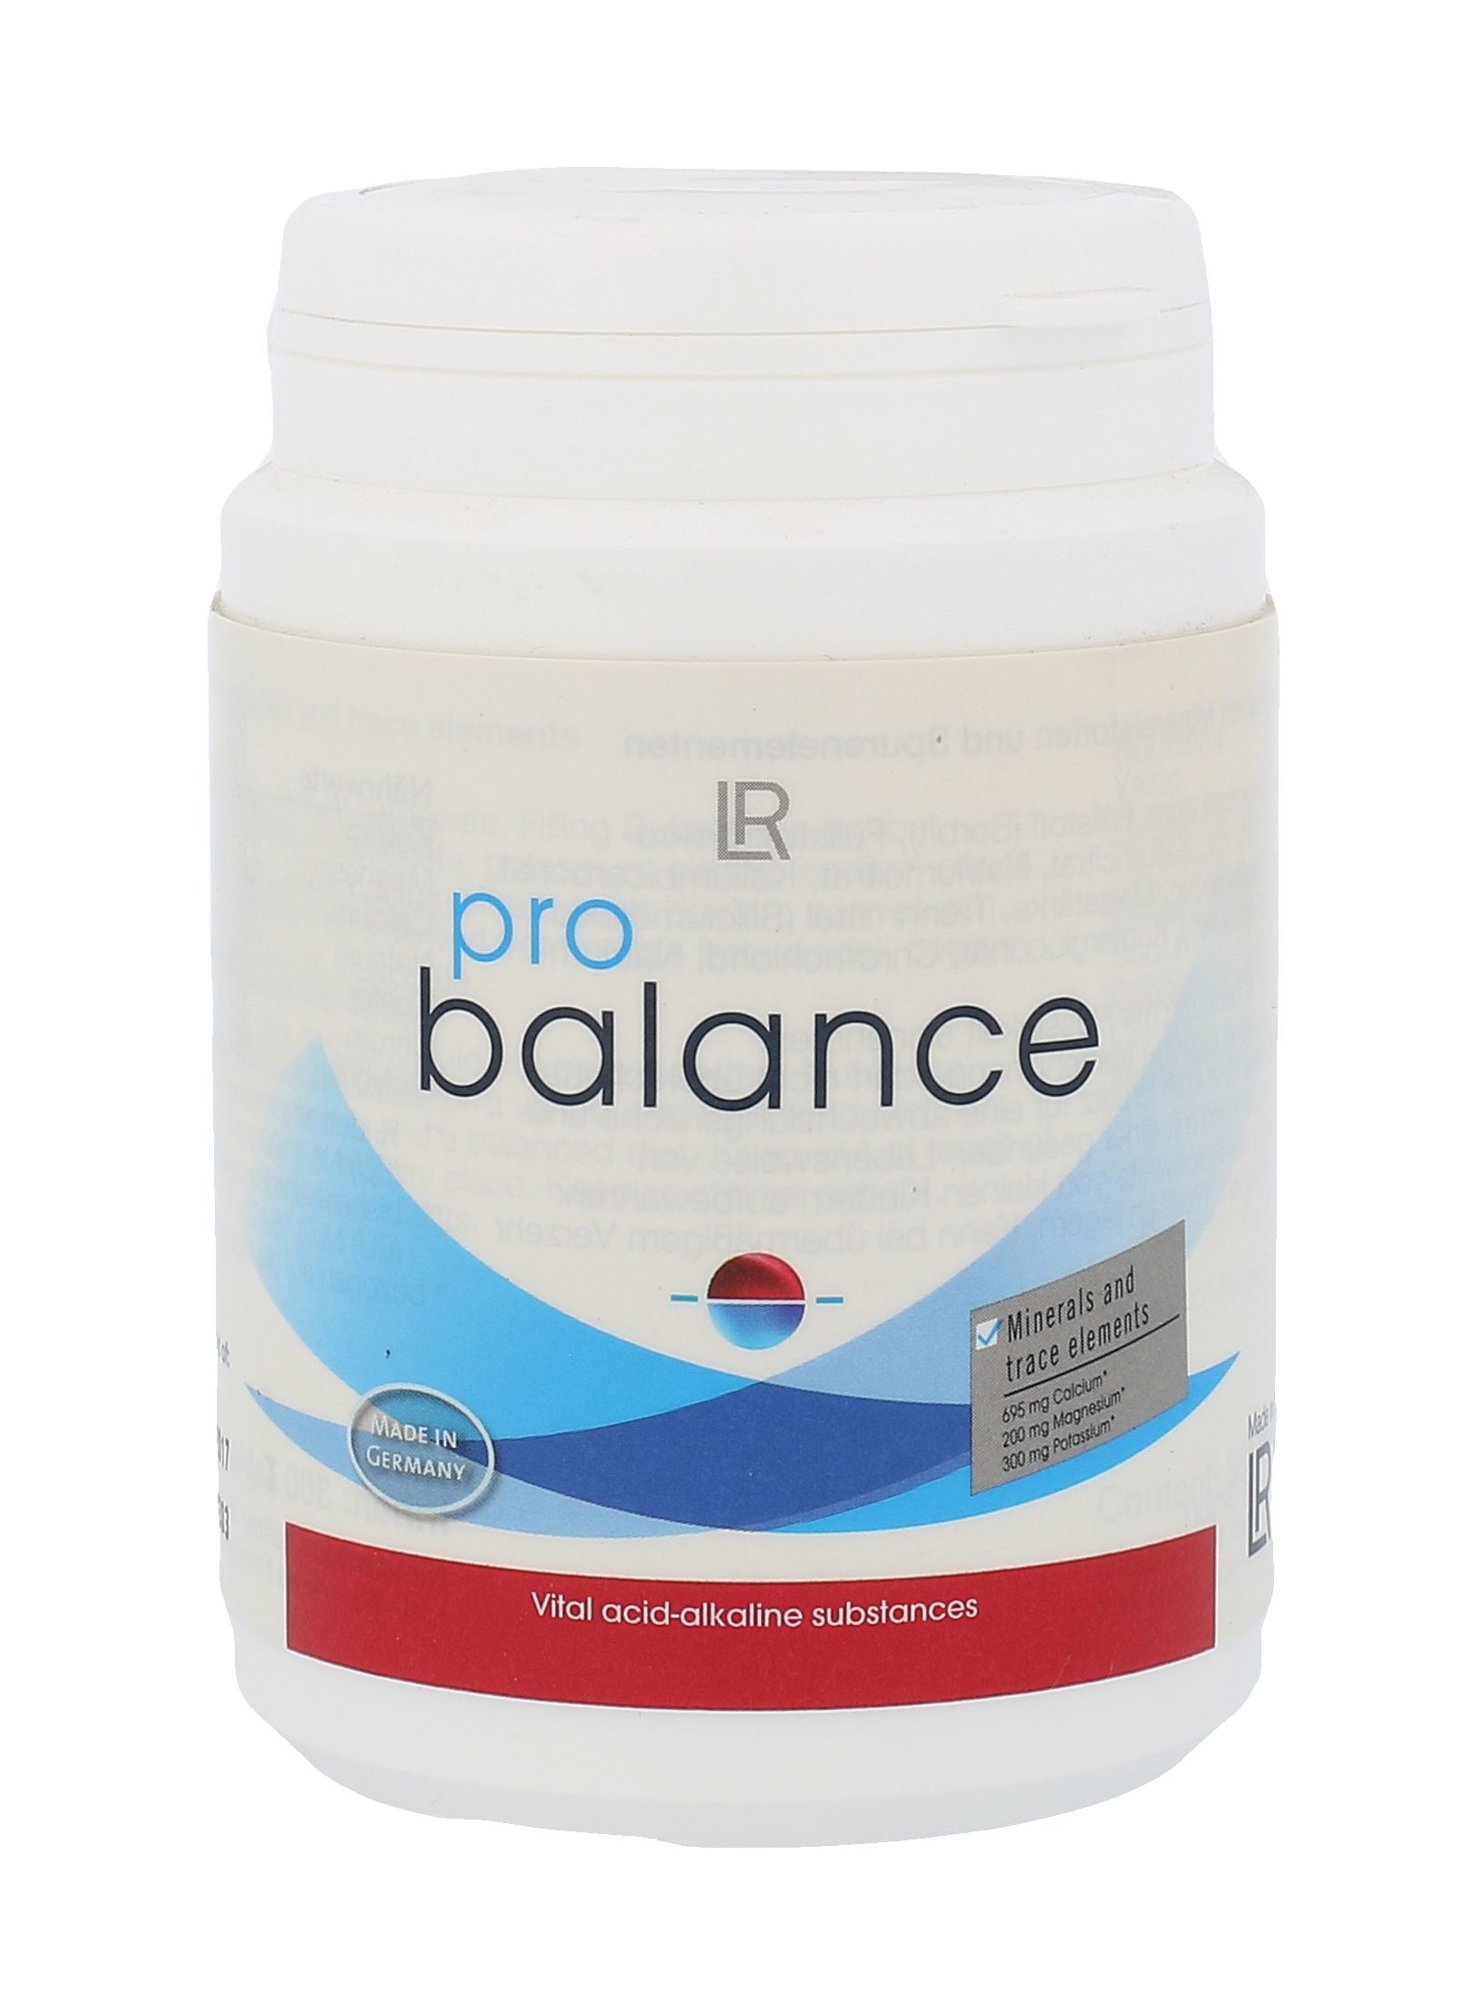 LR Pro Balance